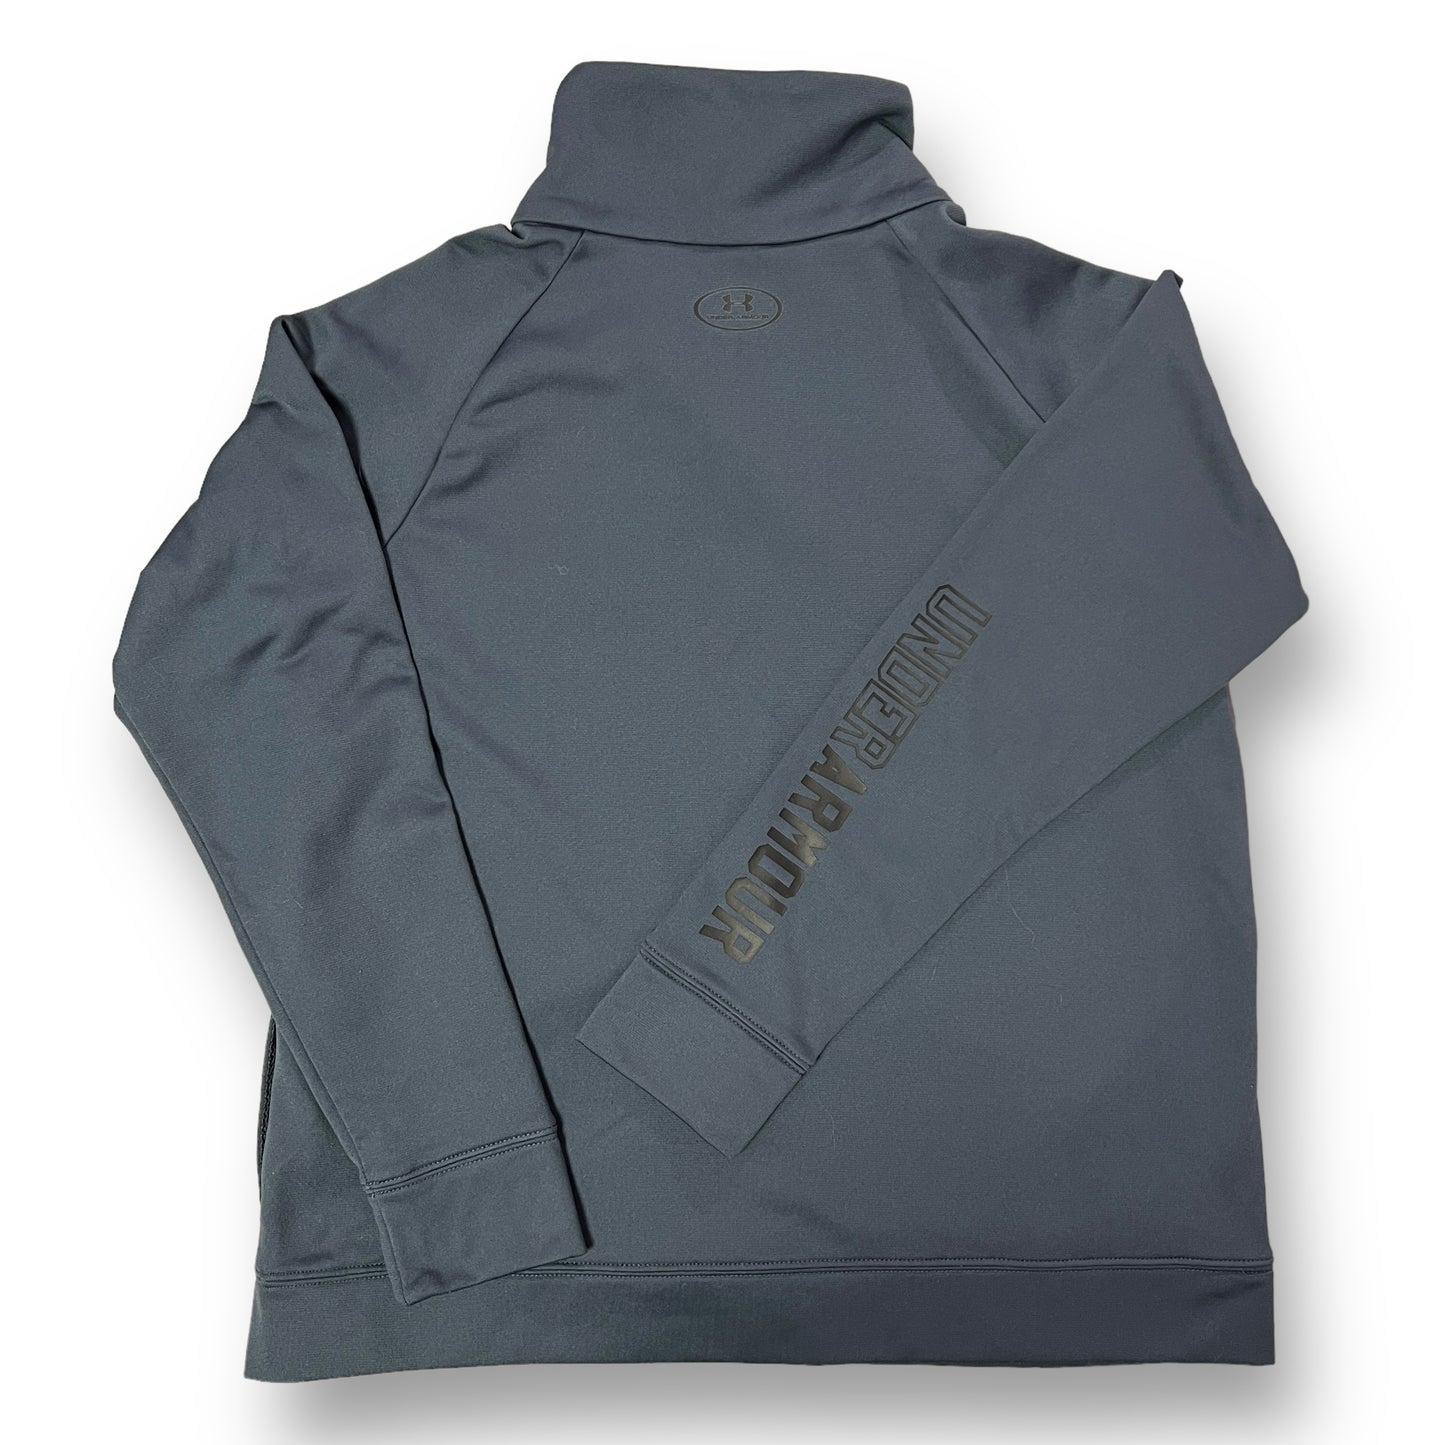 Boys Under Armour Size 14/16 YXL Dark Gray Zippered Warm Up Jacket